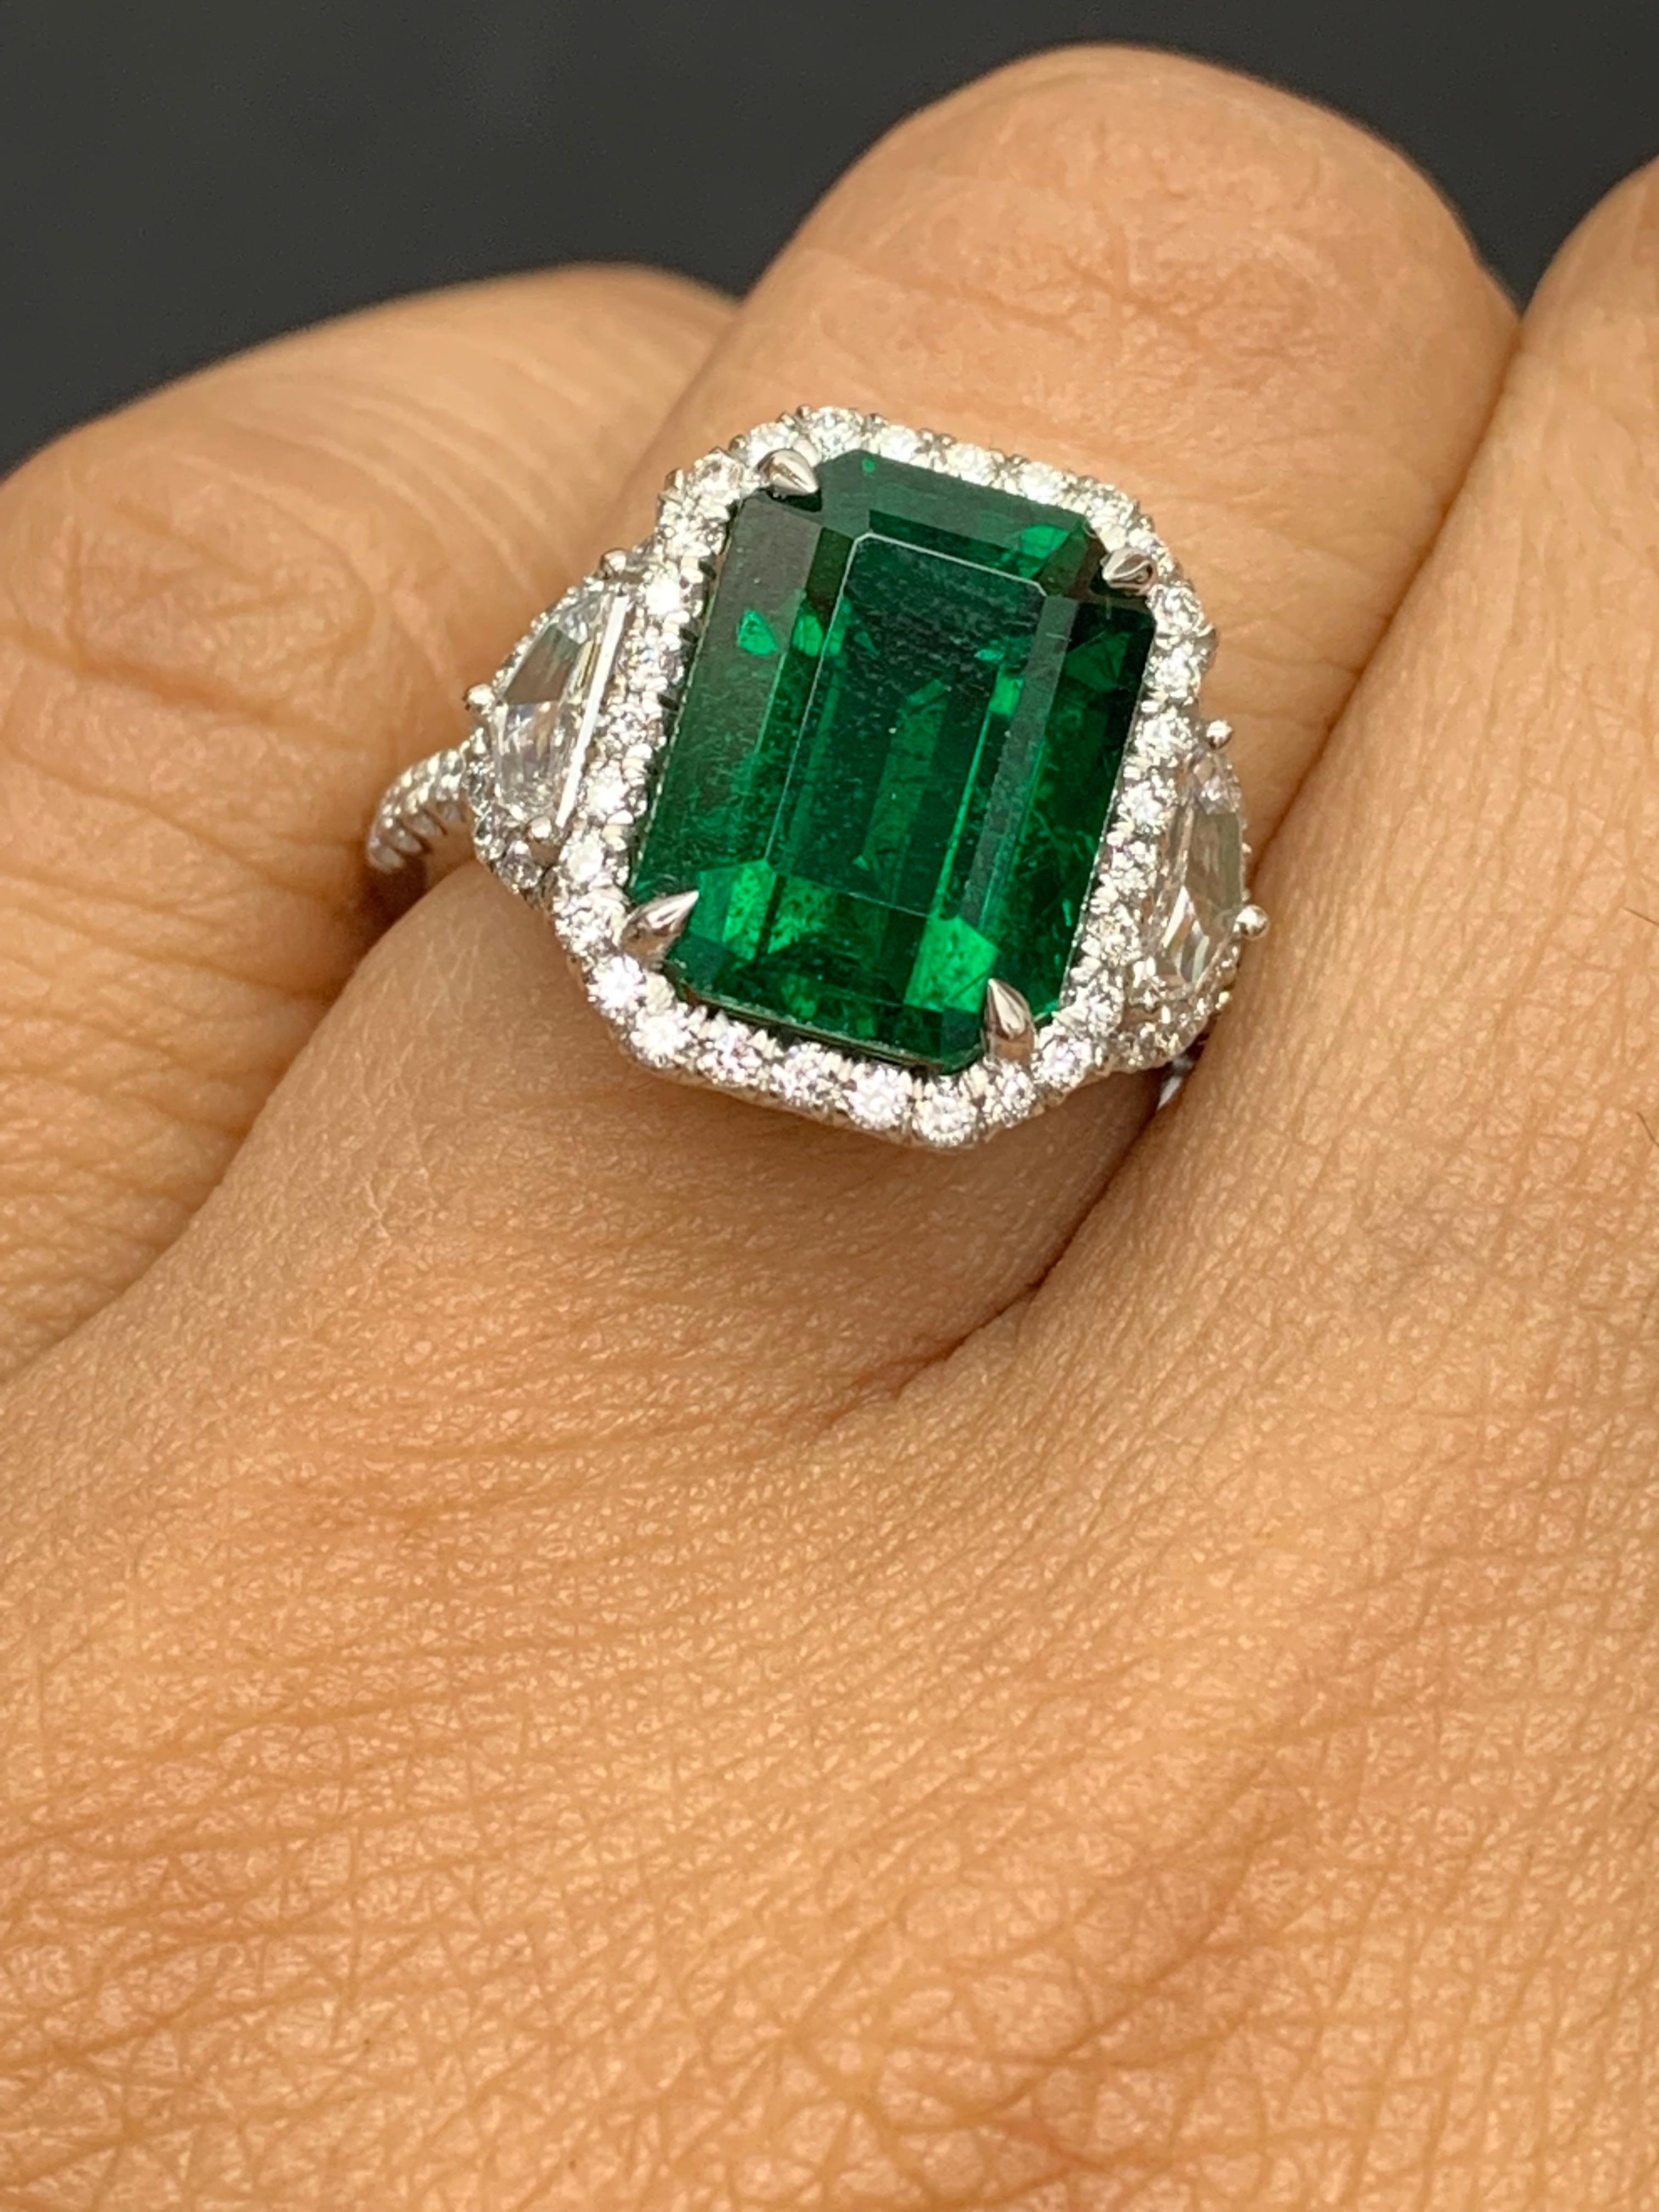 GIA Certified 4.07 Carat Emerald Cut Emerald Diamond 3 Stone Ring in Platinum For Sale 9